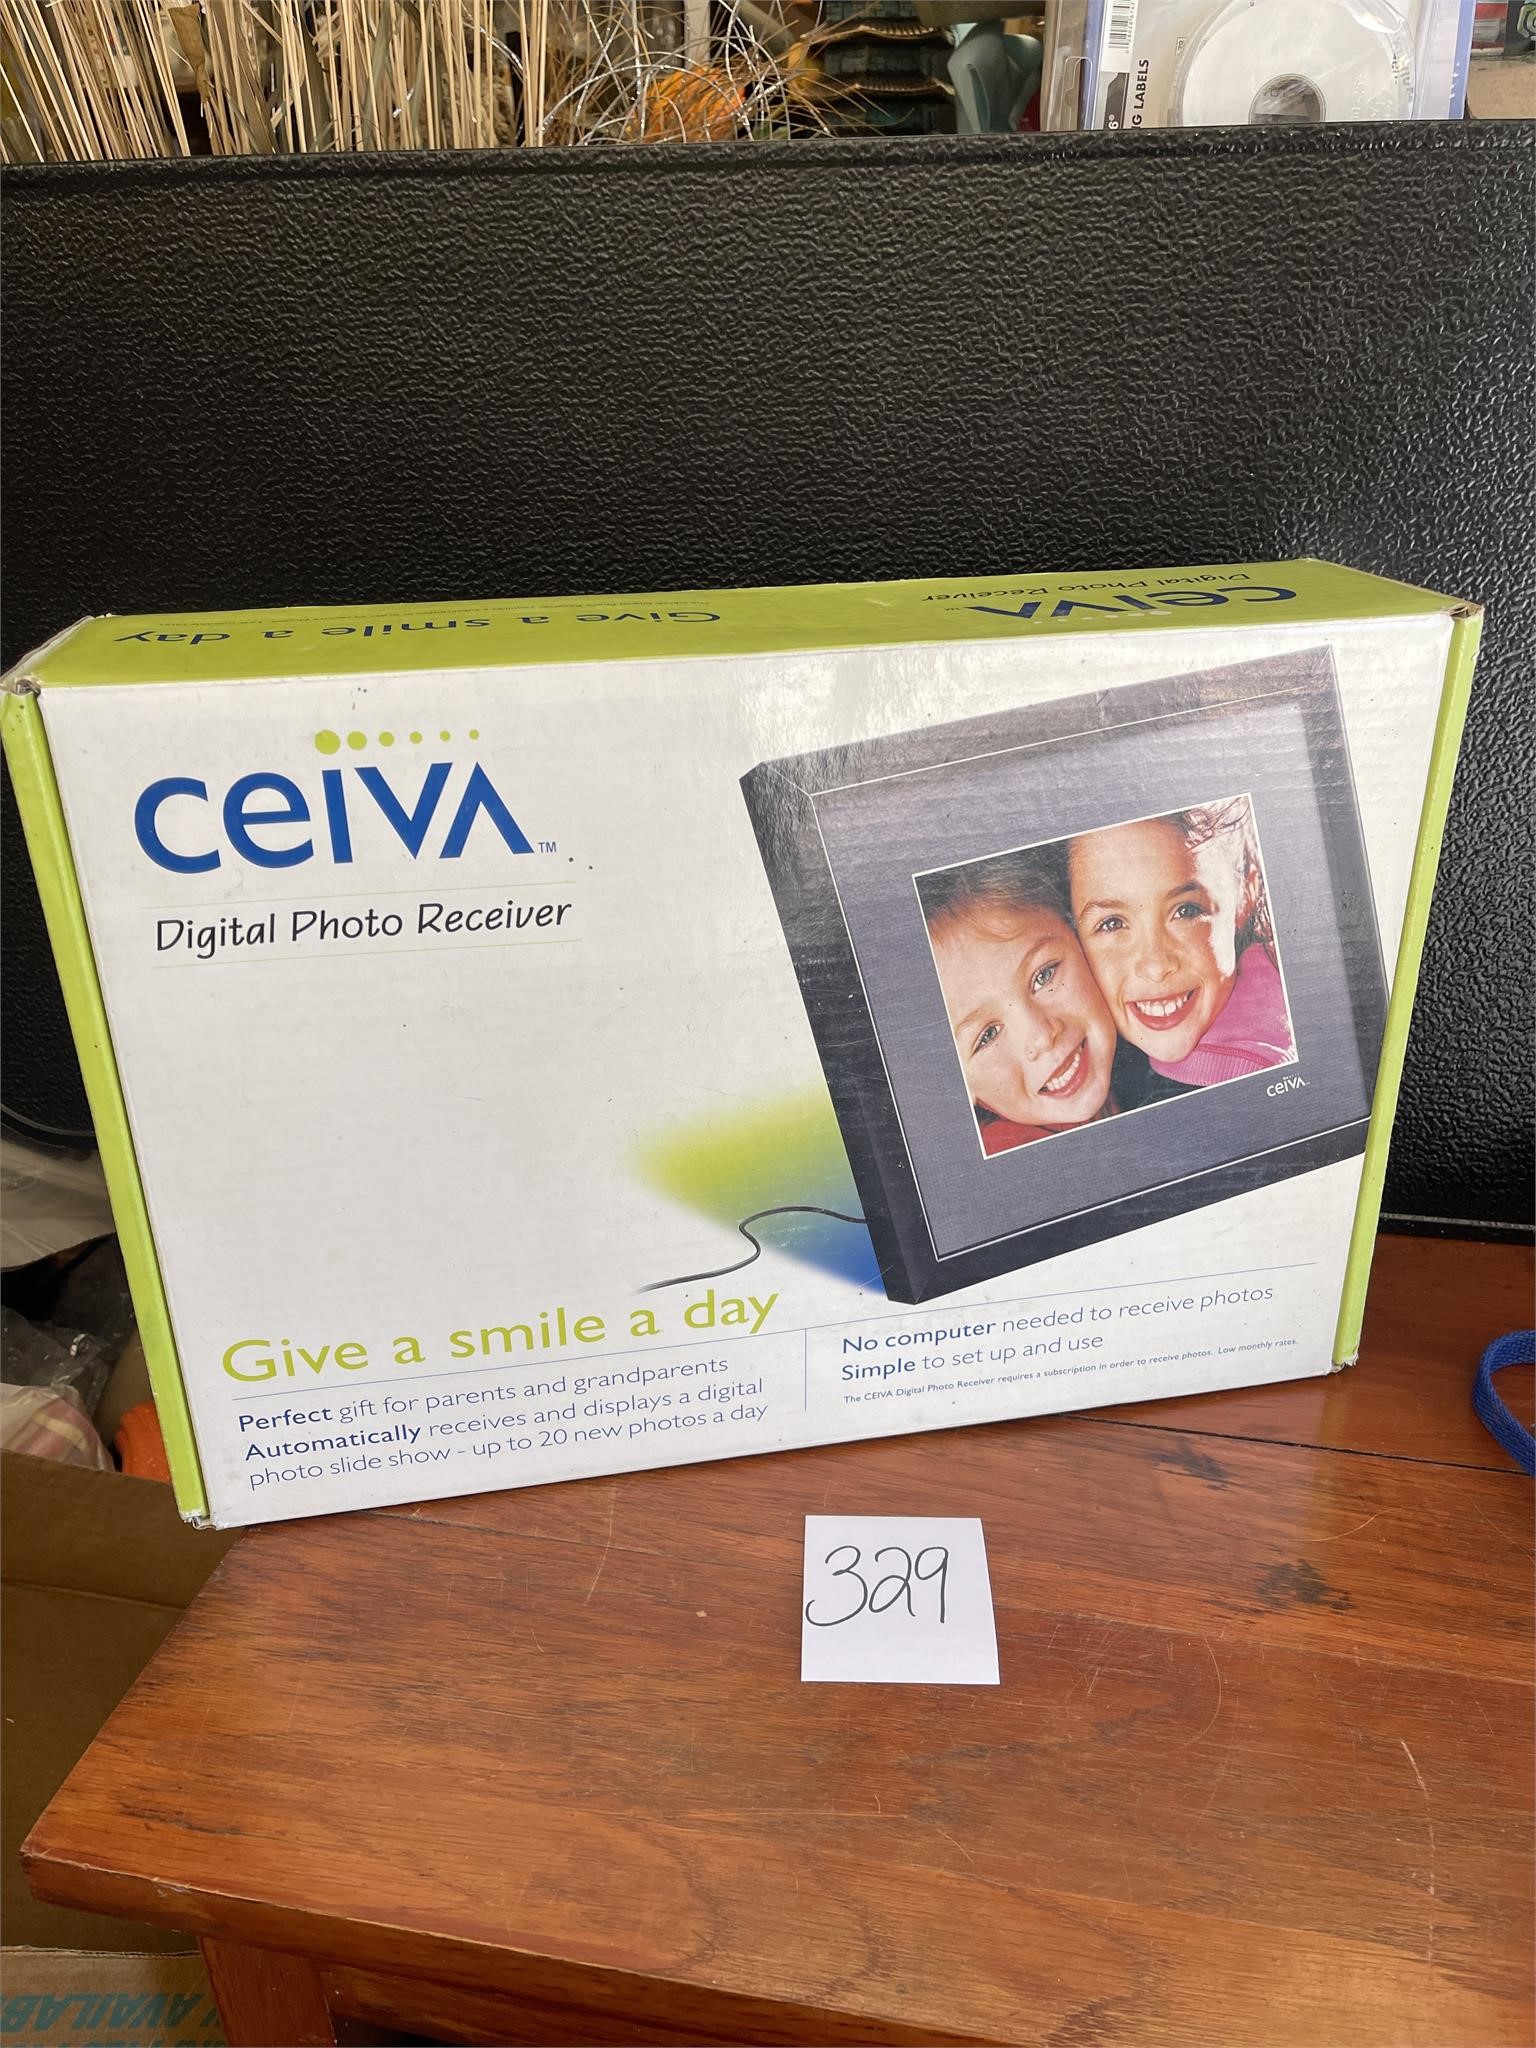 Ceiva digital photo receiver